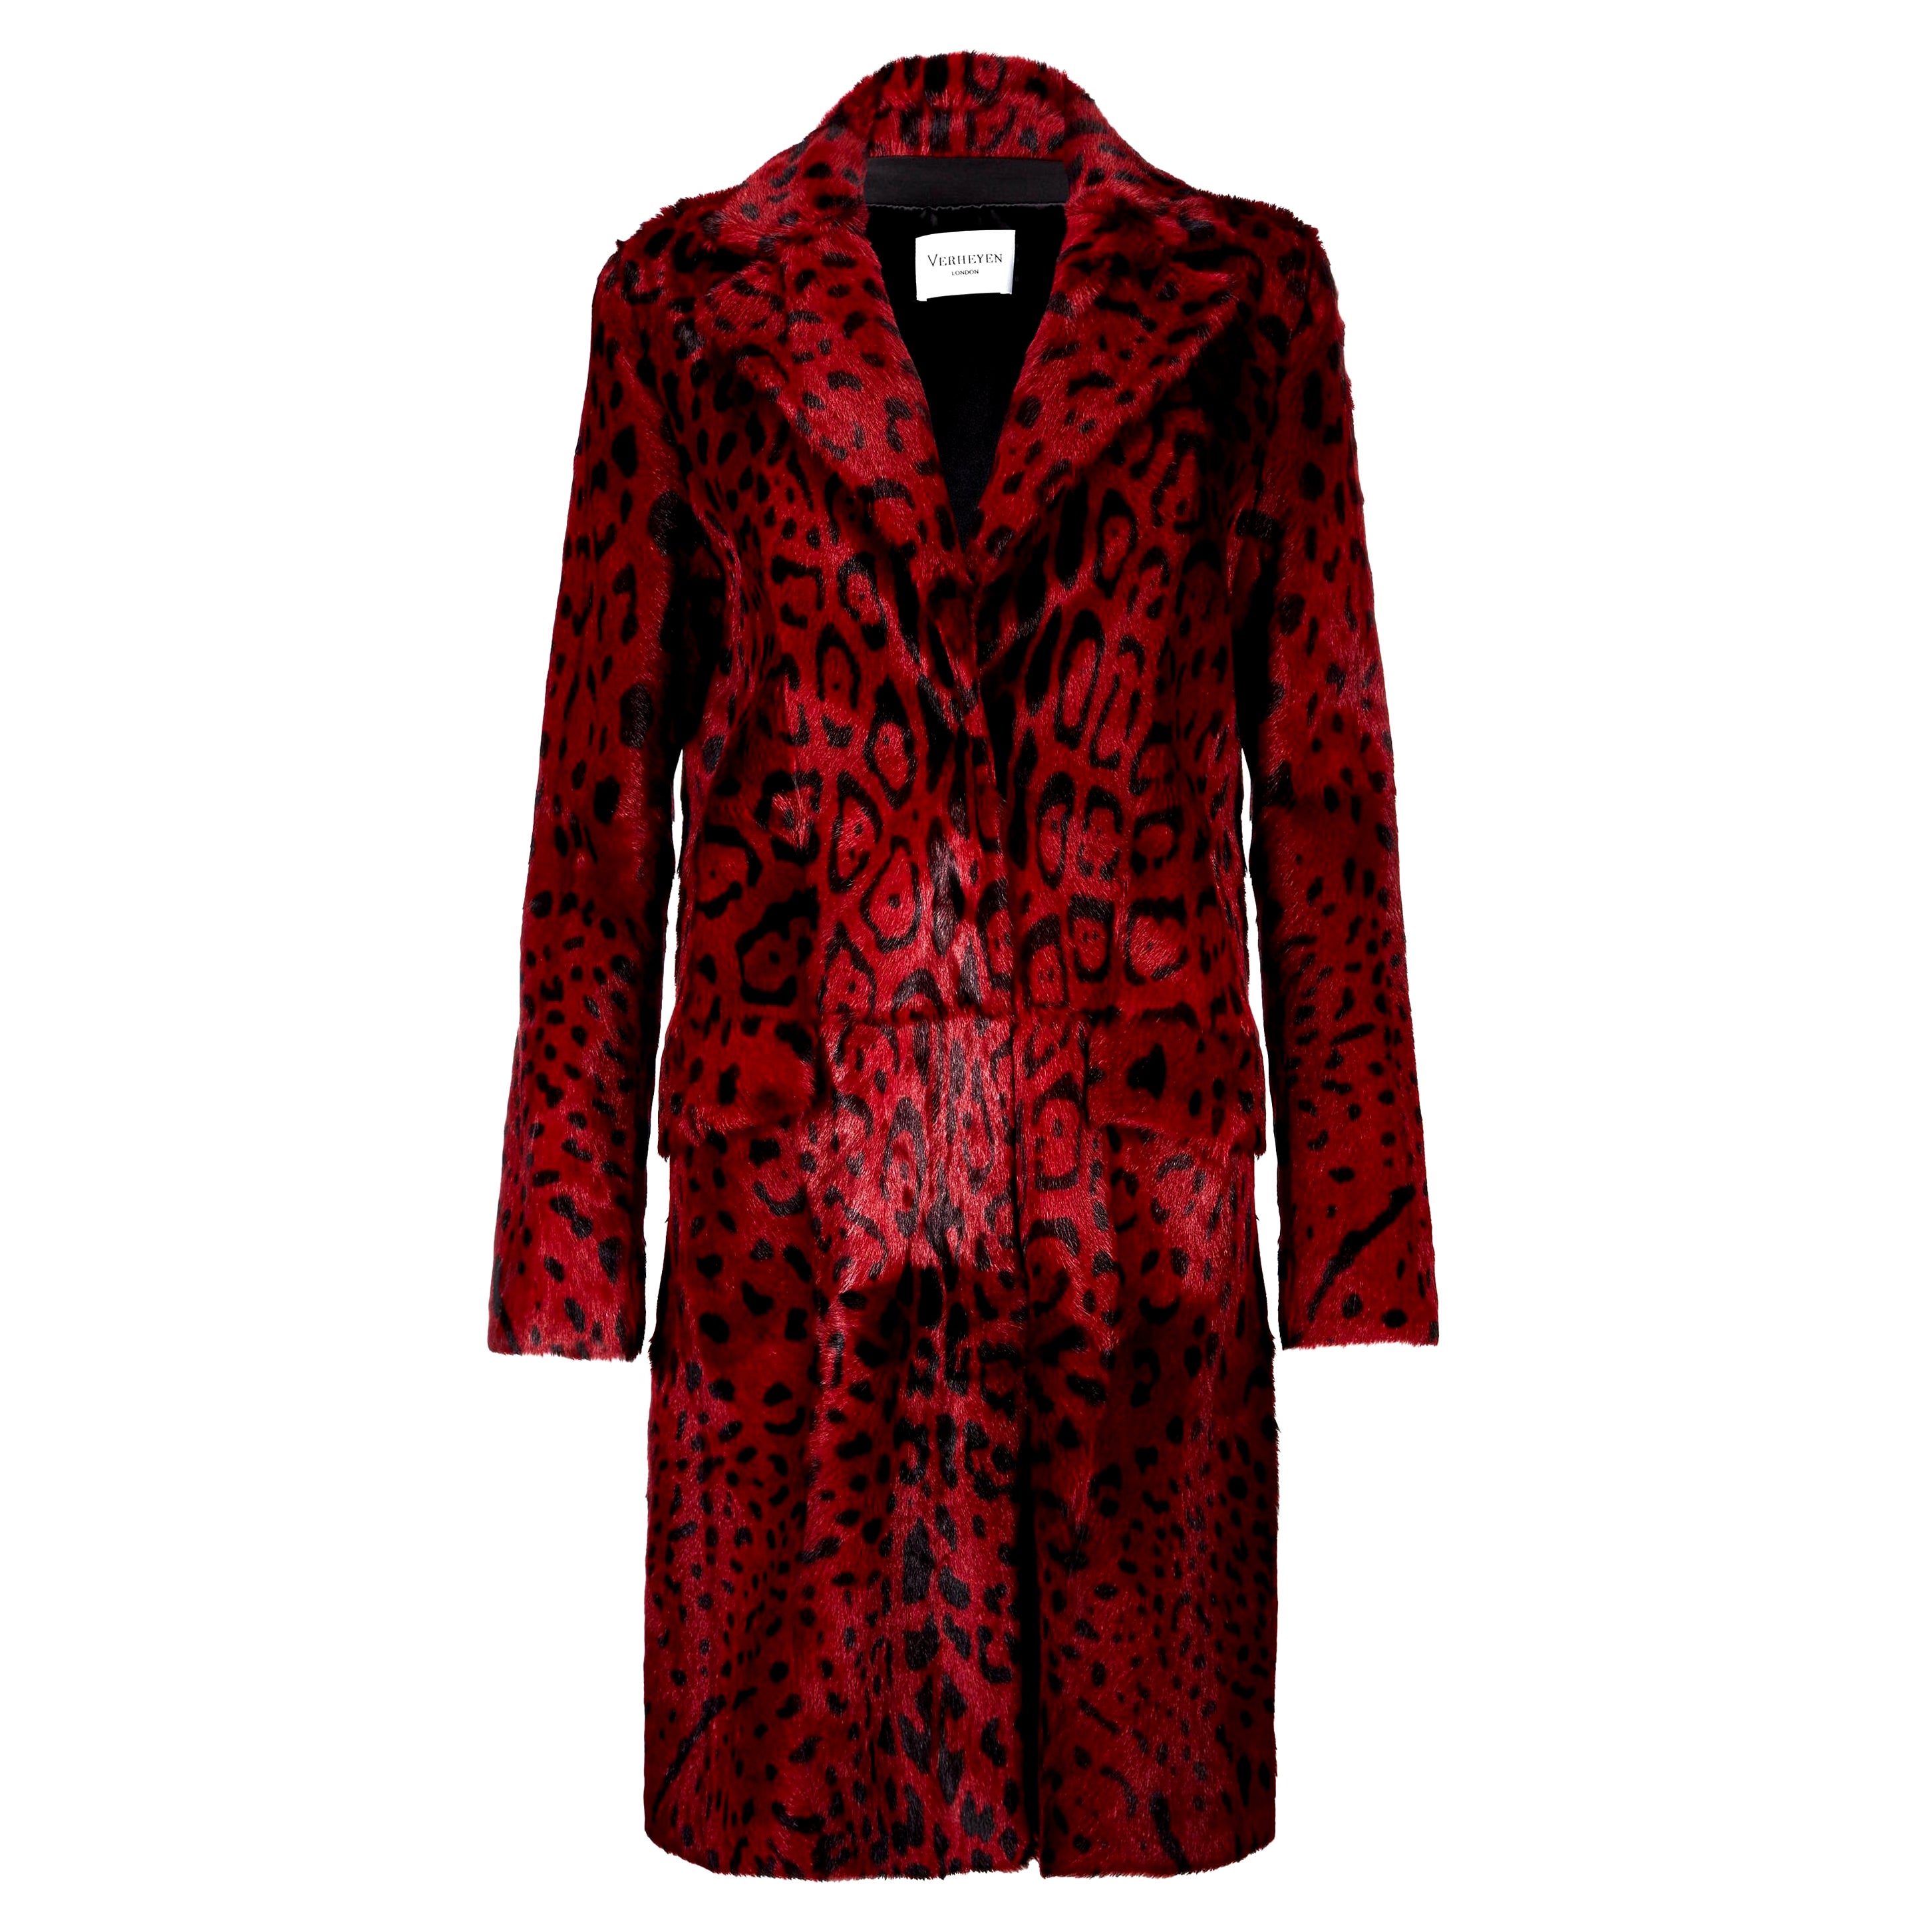 Verheyen London Leopard Print Coat in Red Ruby Goat Hair Fur UK 10 For Sale